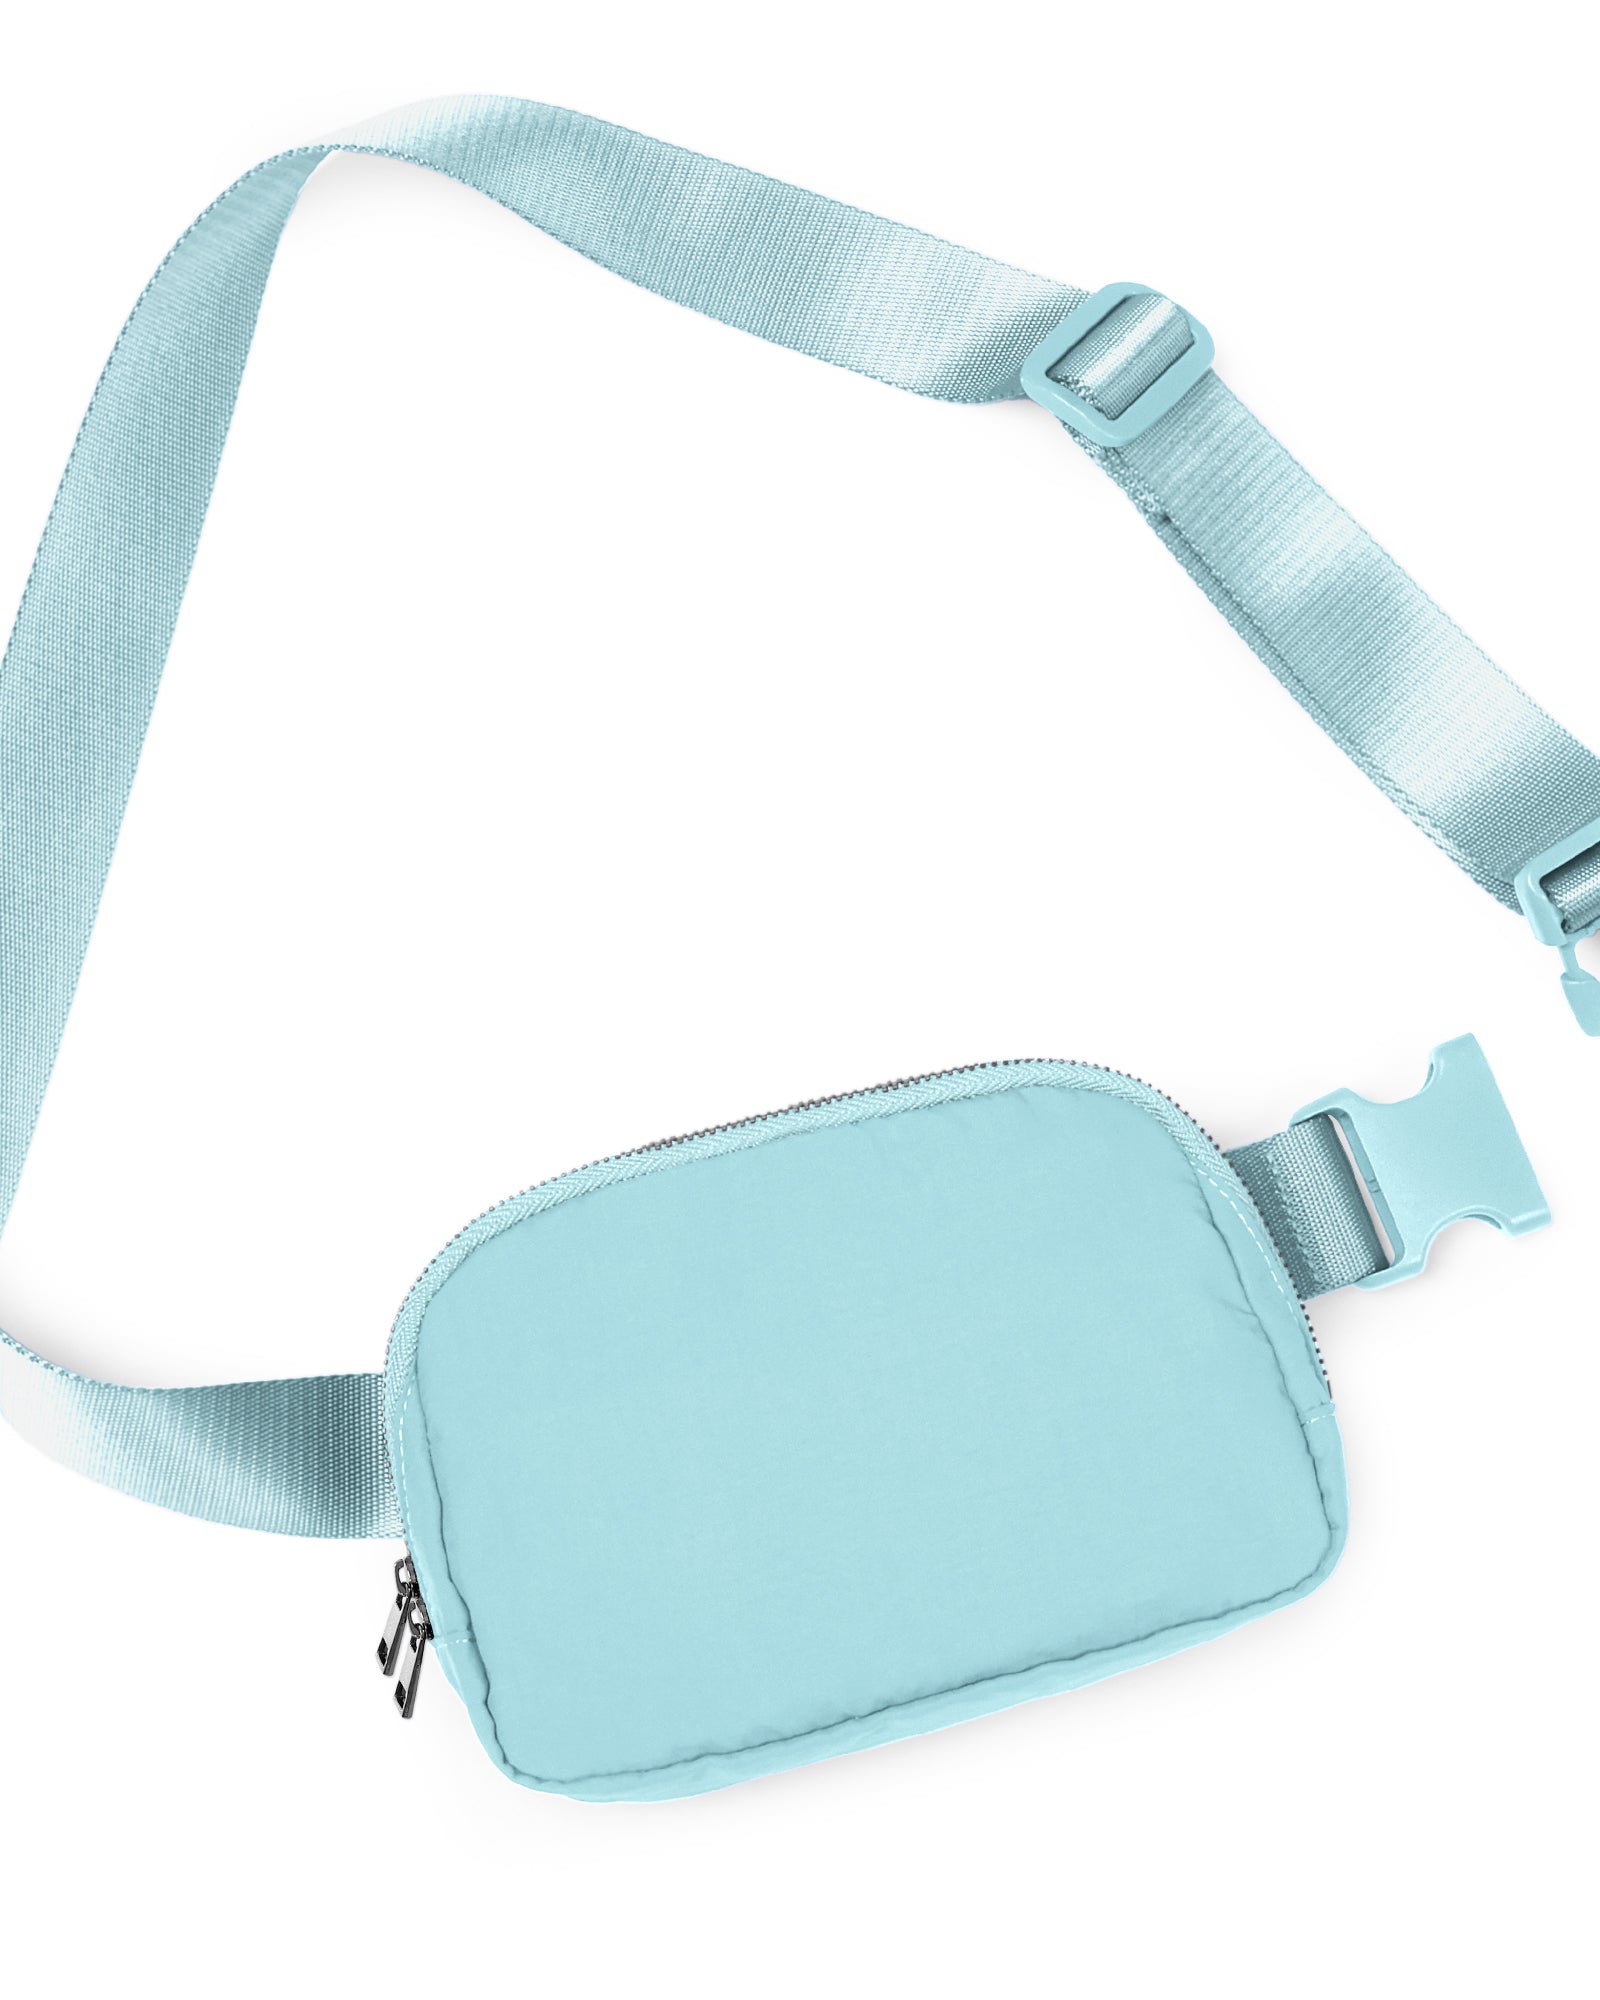 Unisex Two-Way Zip Mini Belt Bag Icing Blue 8" x 2" x 5.5" - ododos